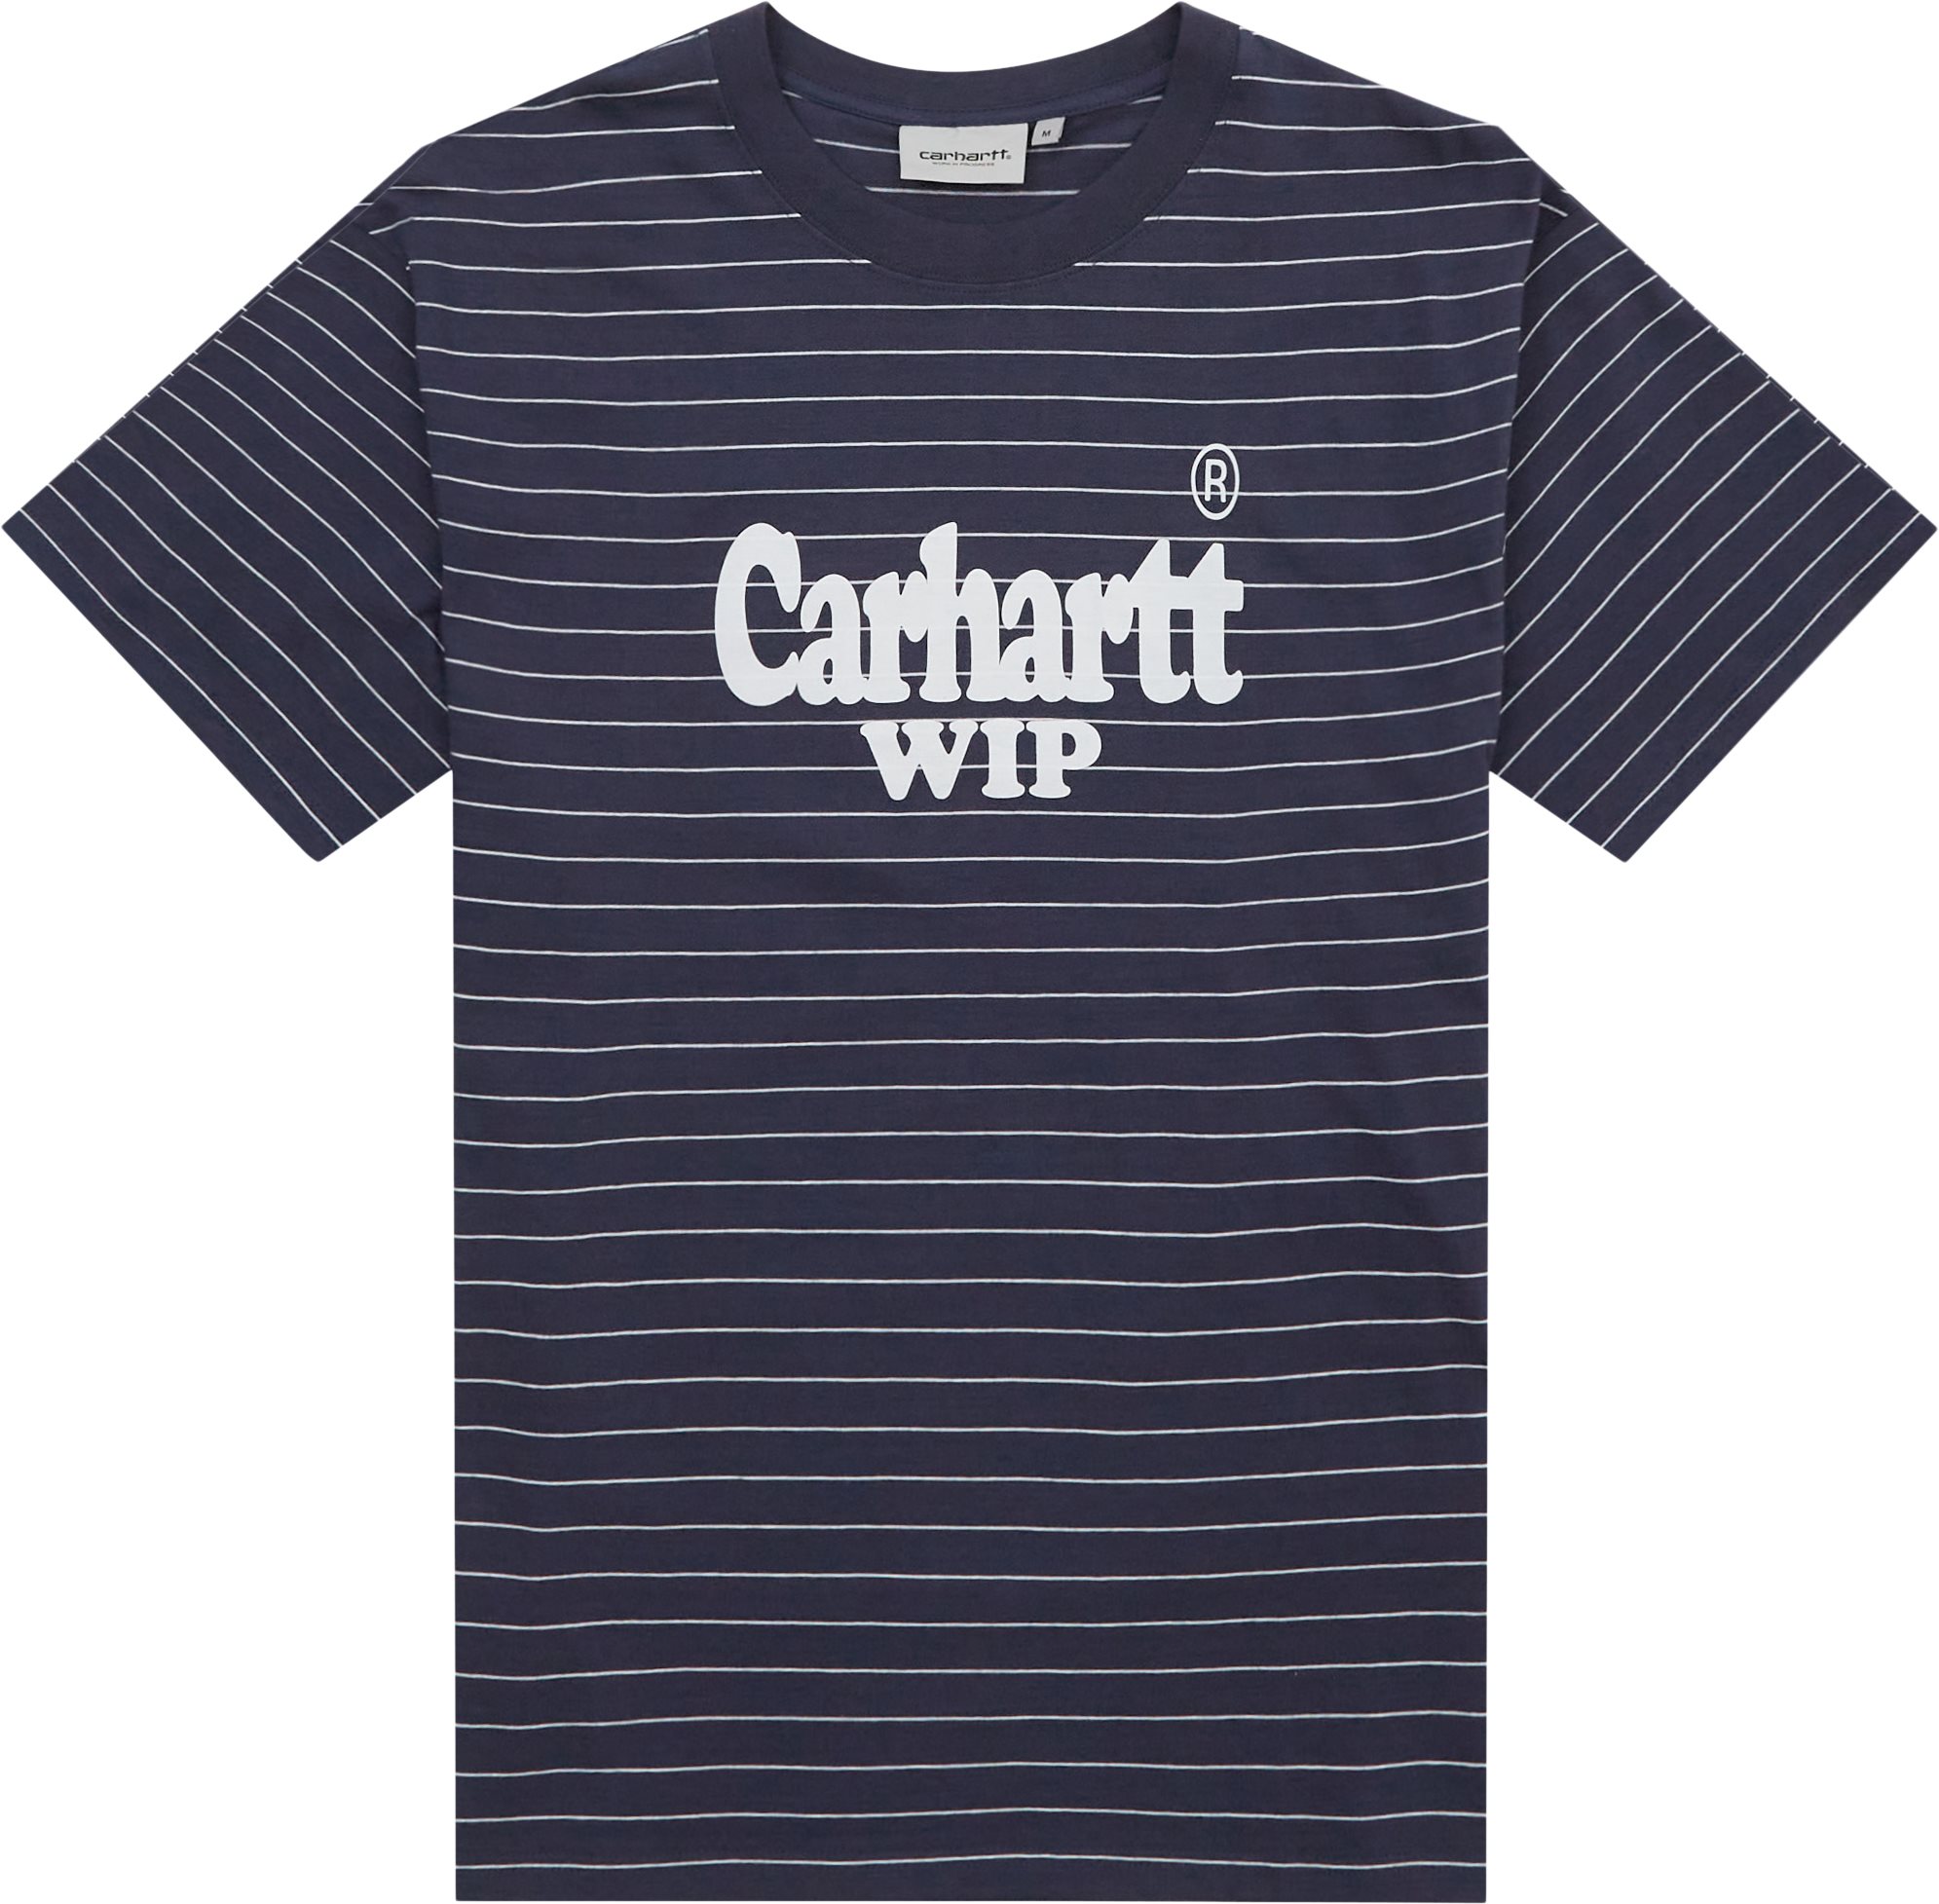 Carhartt WIP T-shirts S/S ORLEAN SPREE T-SHIRT I032850 Blå